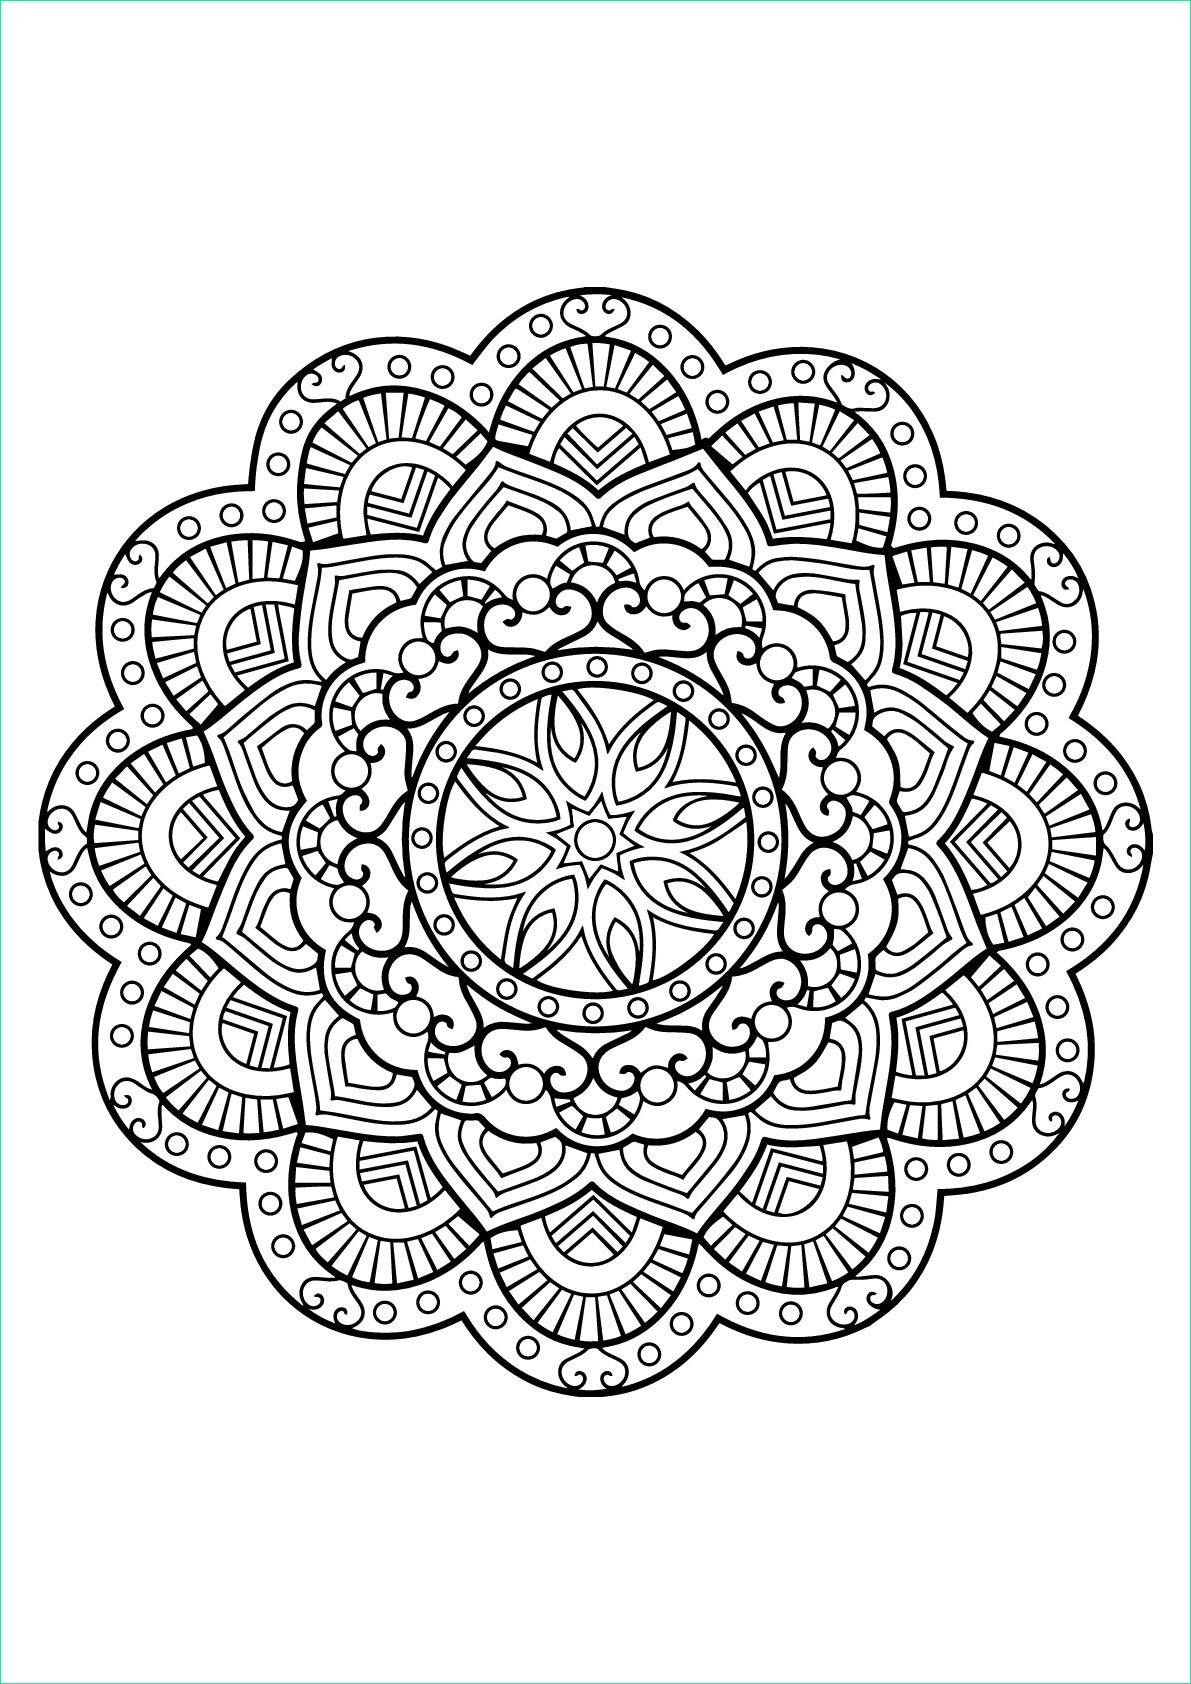 image=mandalas mandala from free coloring book for adults 26 1